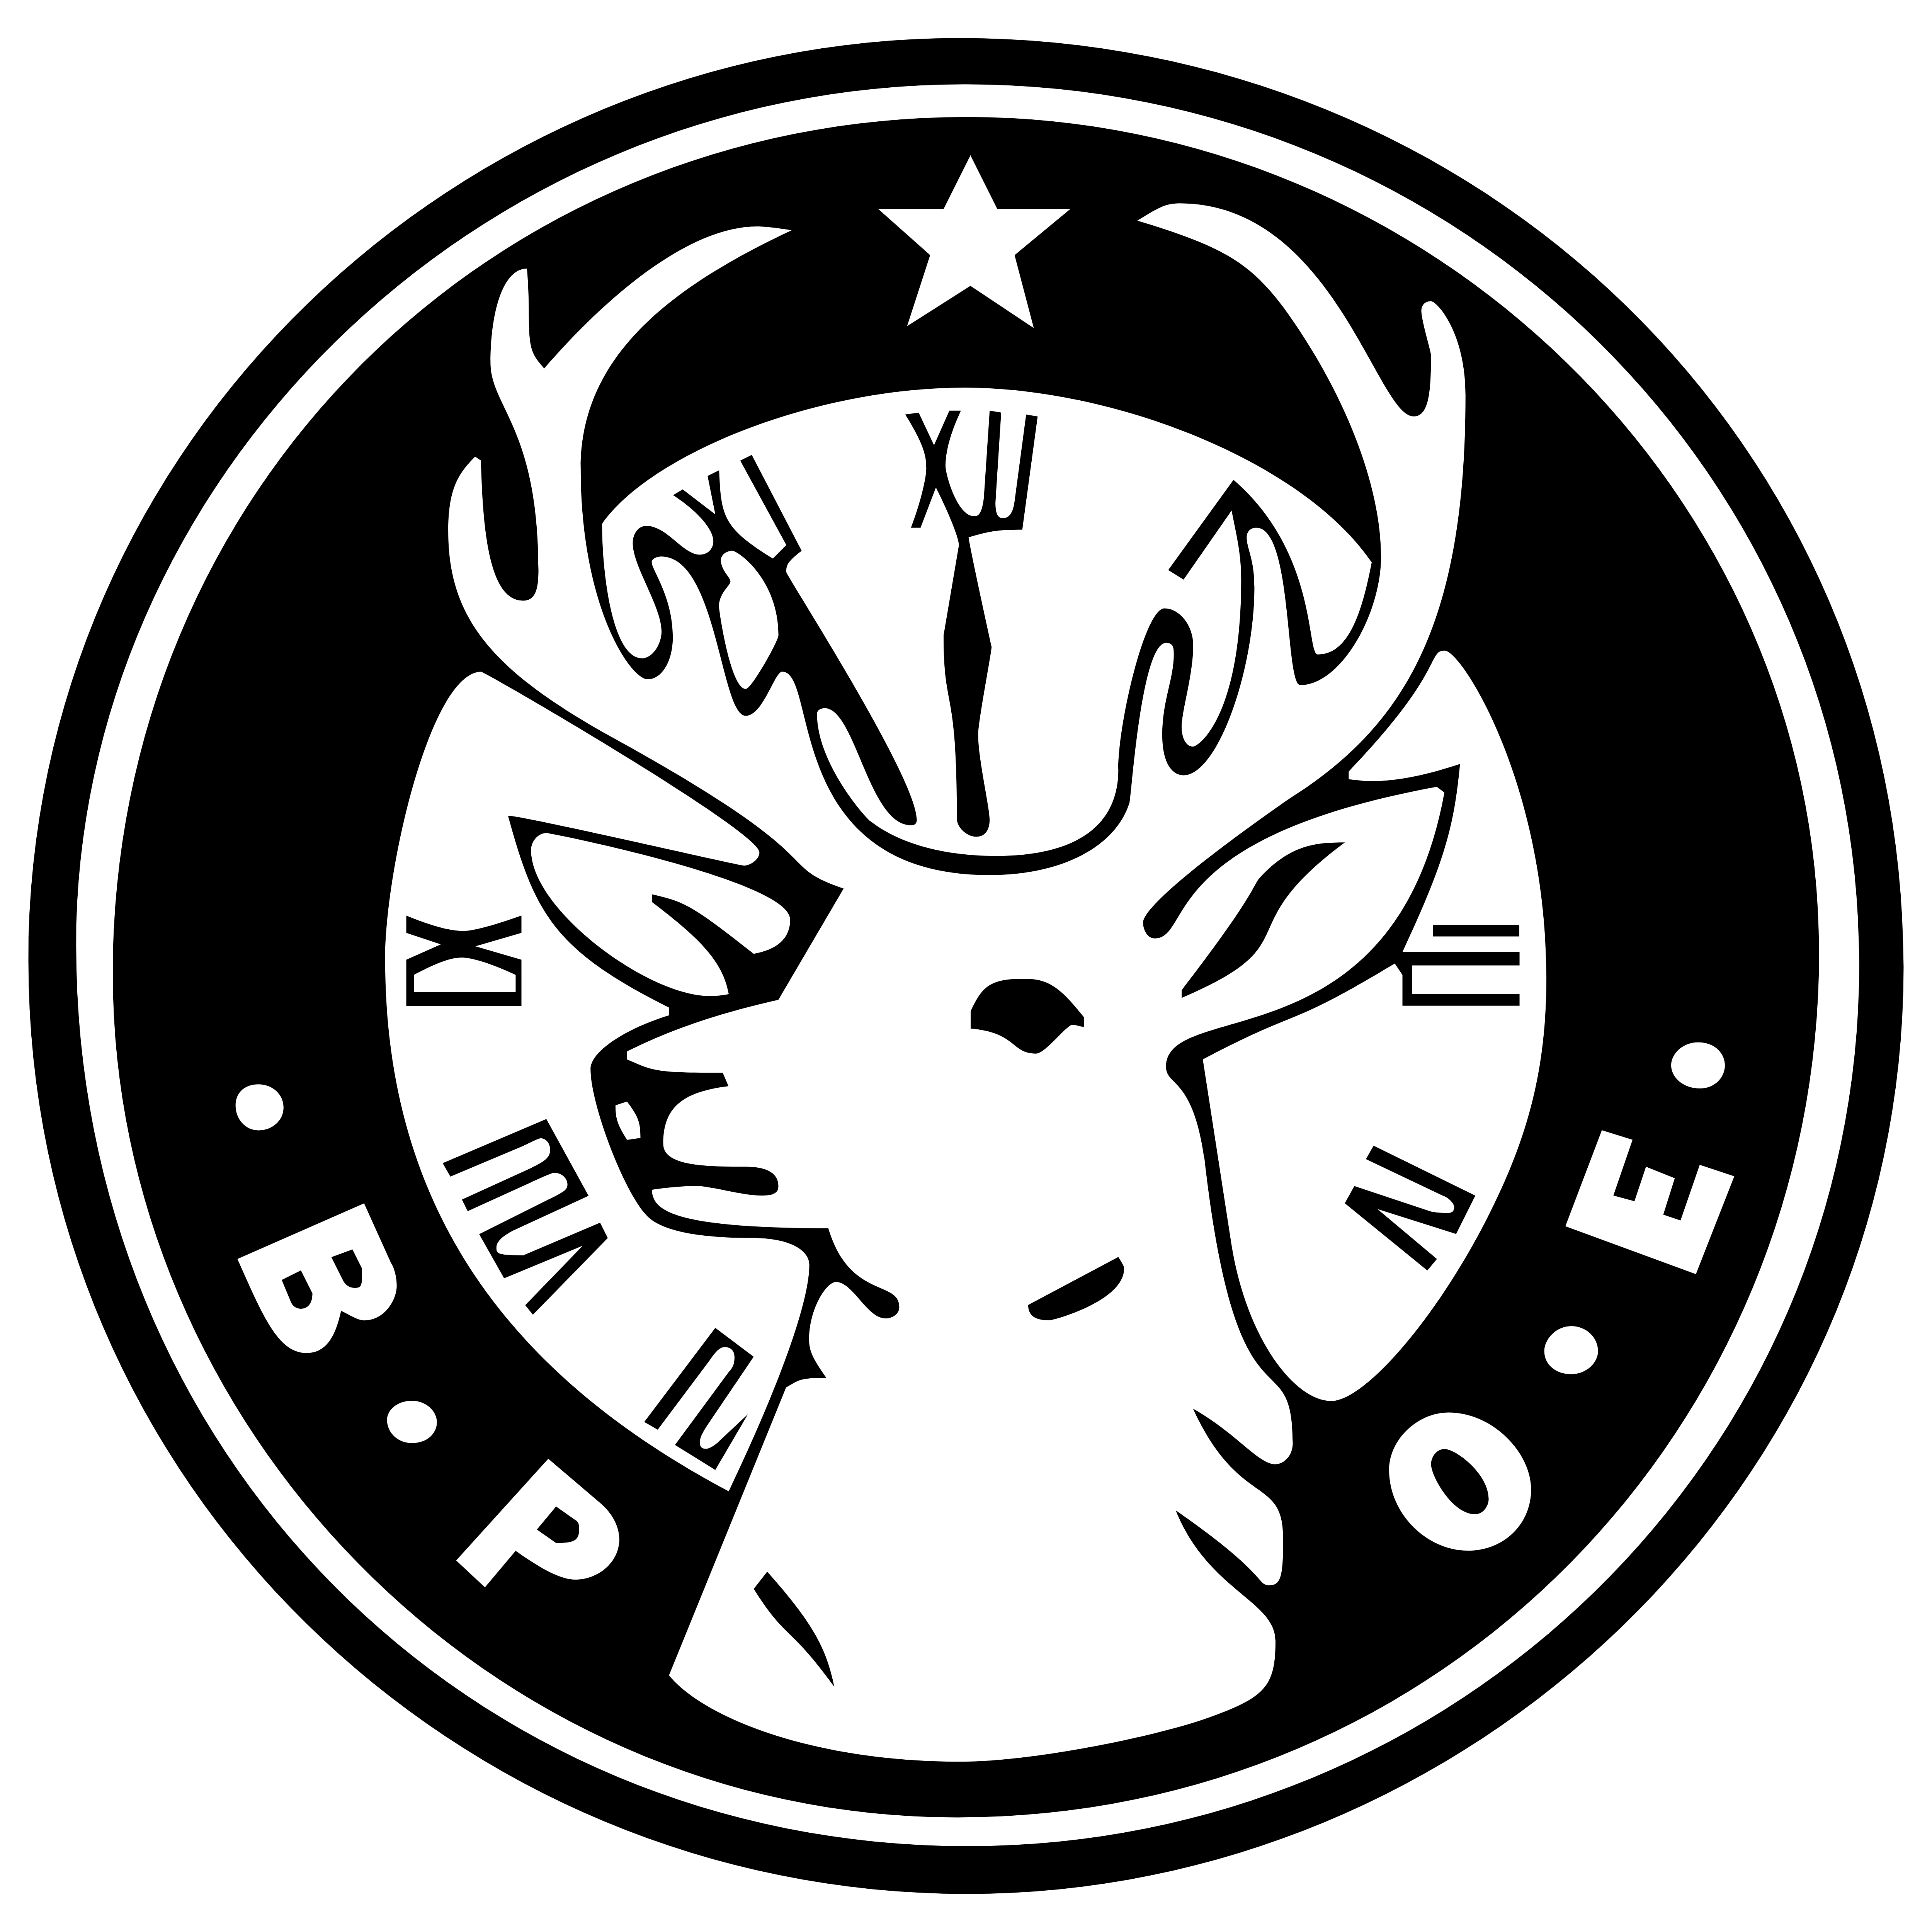 Elks Club Logos Download